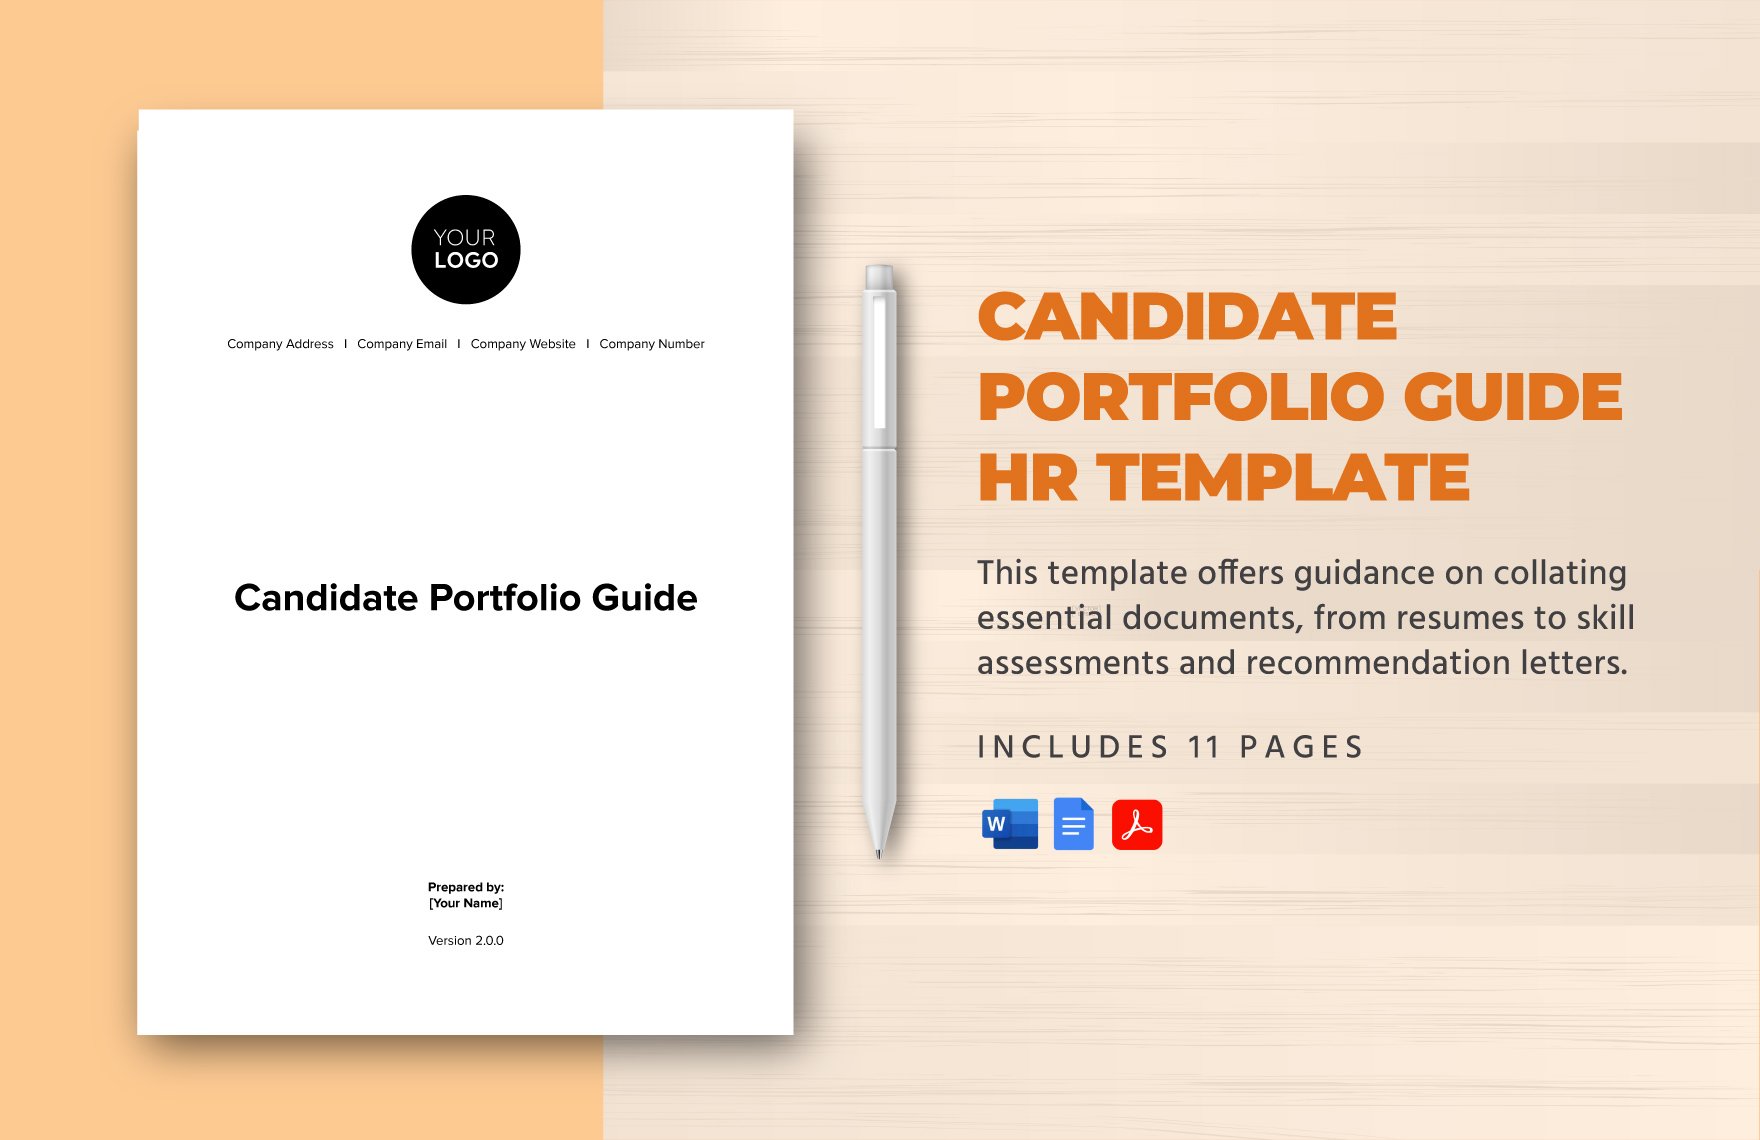 Candidate Portfolio Guide HR Template